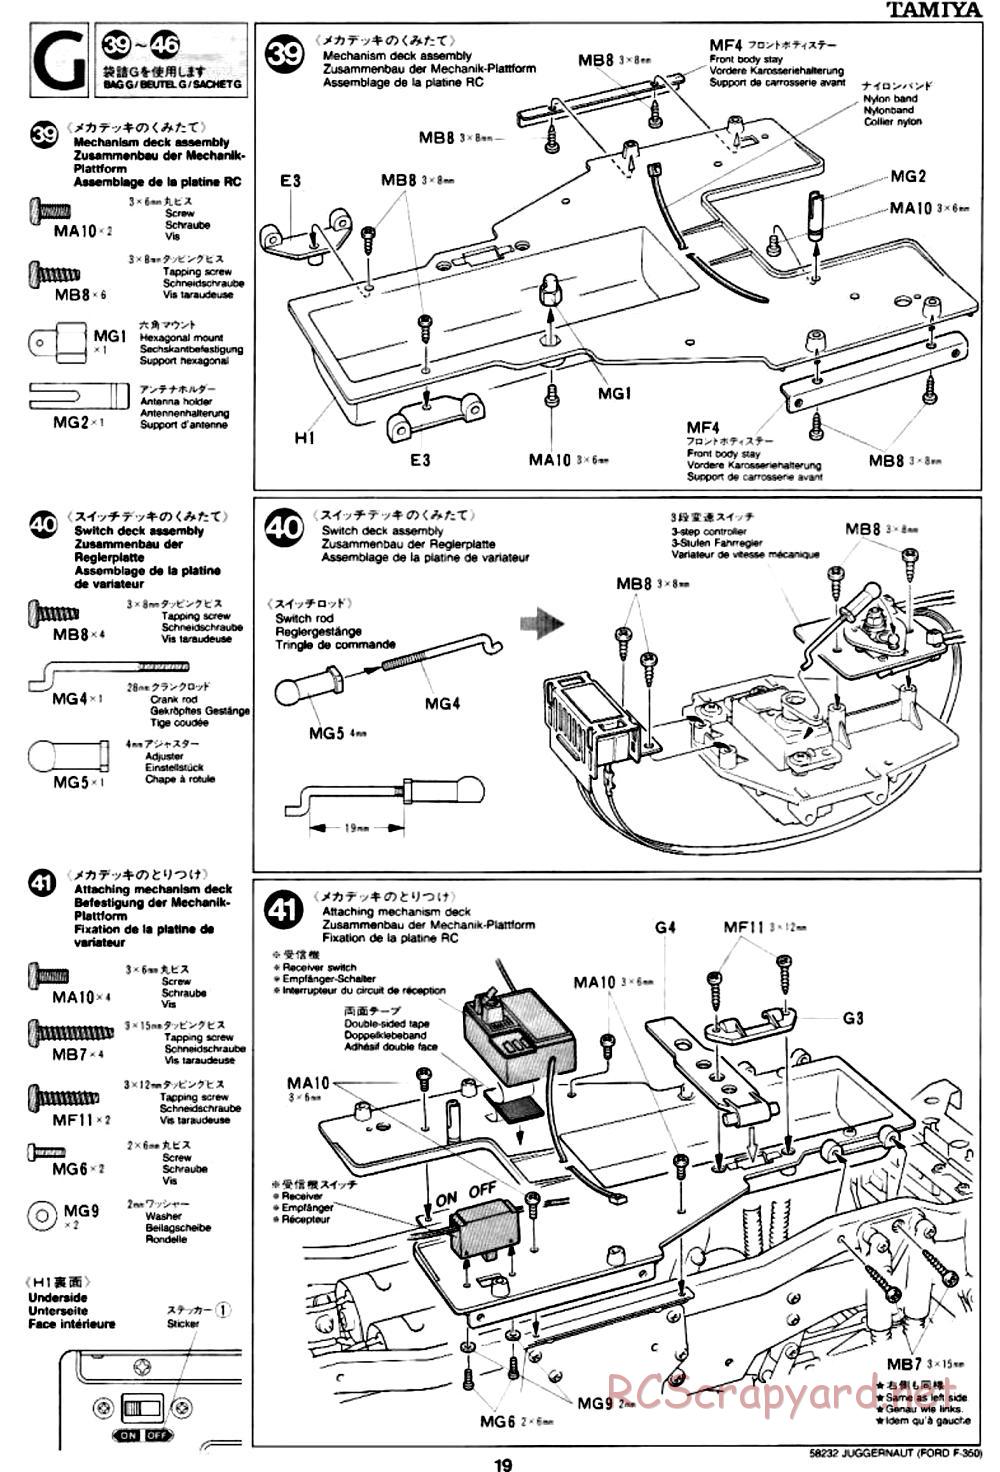 Tamiya - Juggernaut Chassis - Manual - Page 19